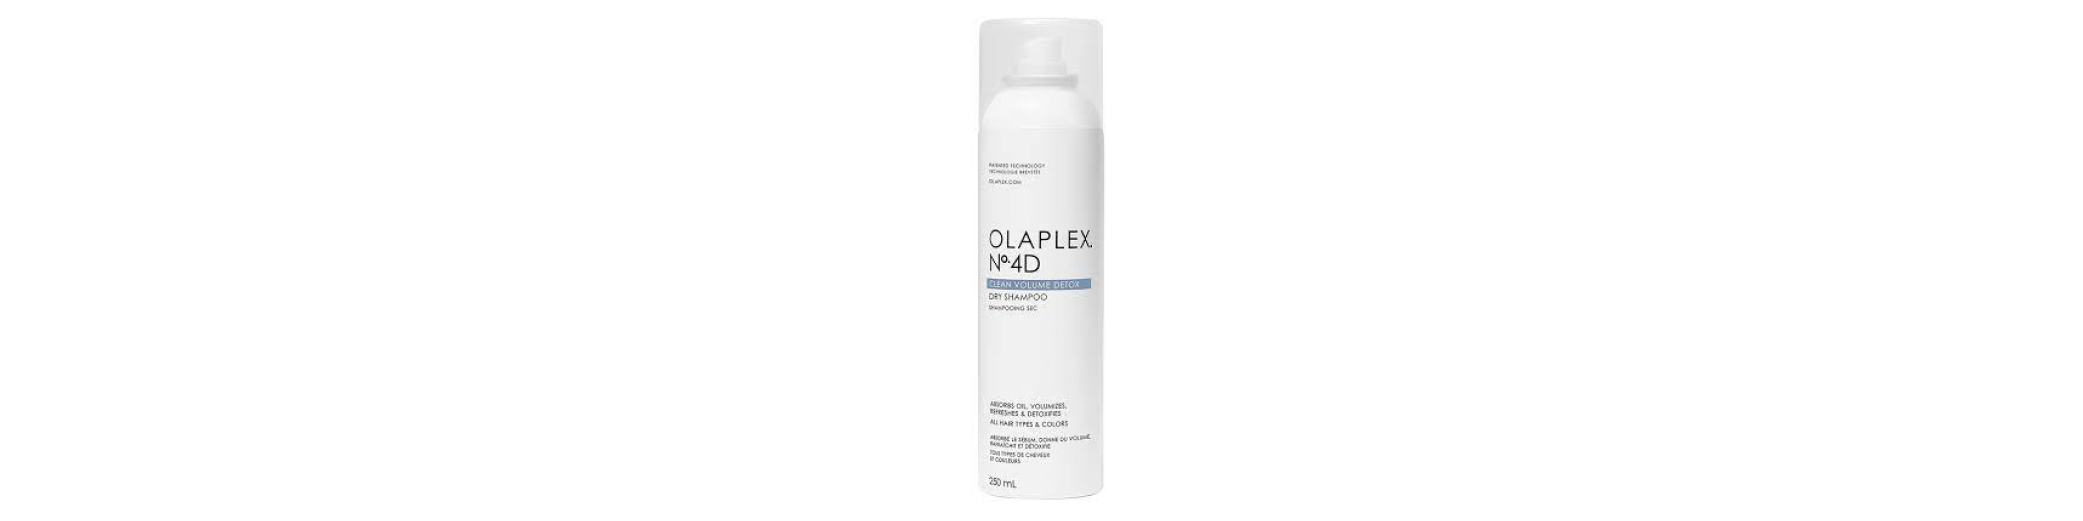 olaplex-dry-shampoo